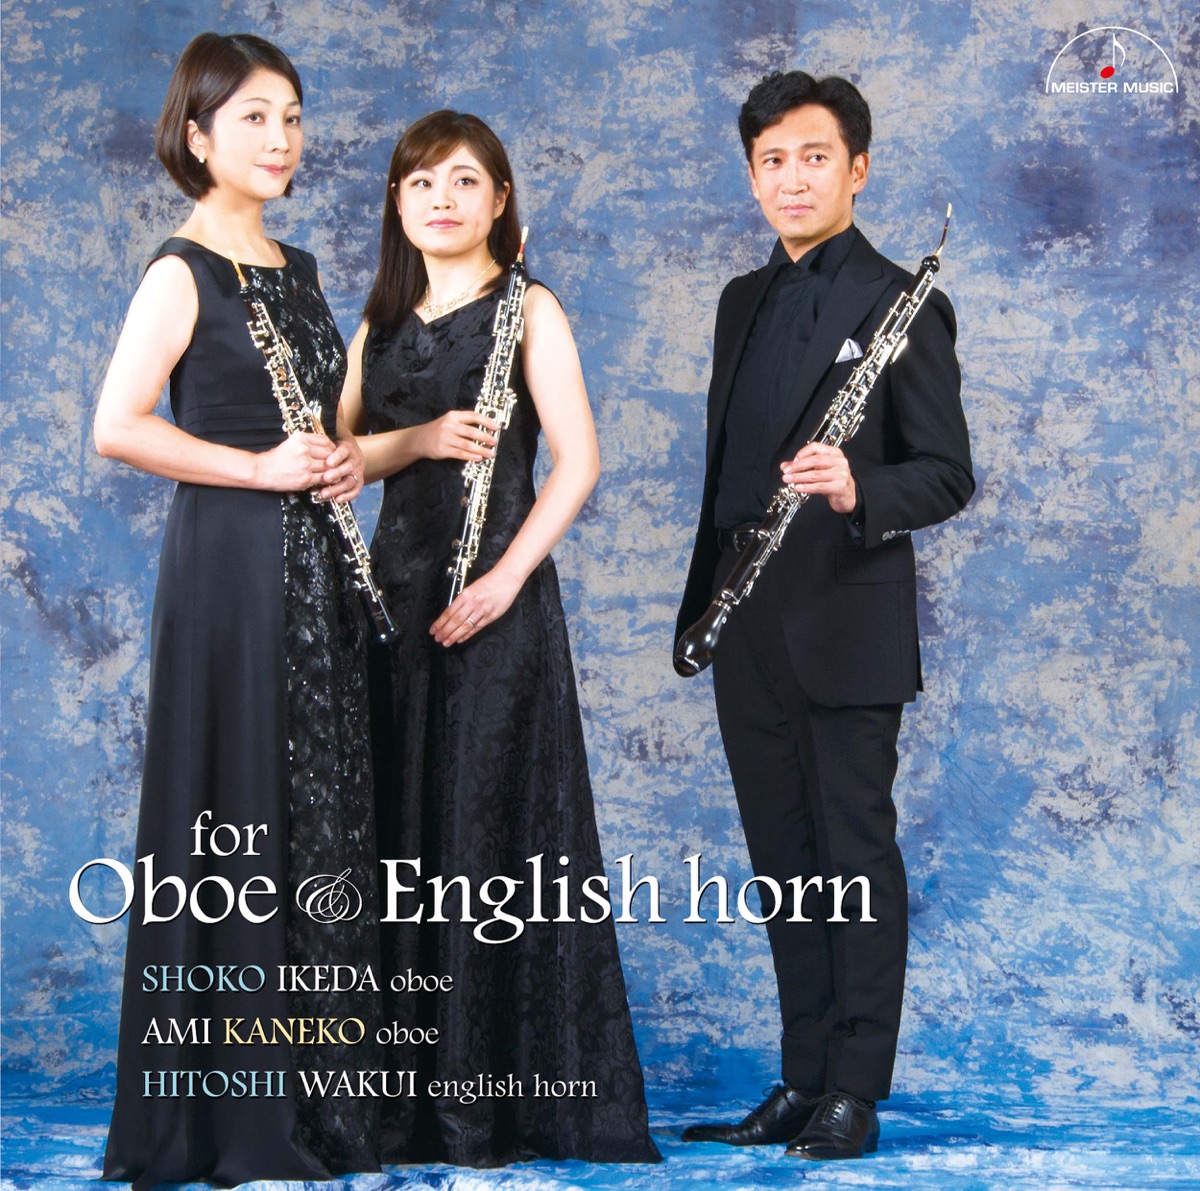 for Oboe & English horn - Album by Shoko Ikeda, Ami Kaneko & Hitoshi Wakui  - Apple Music